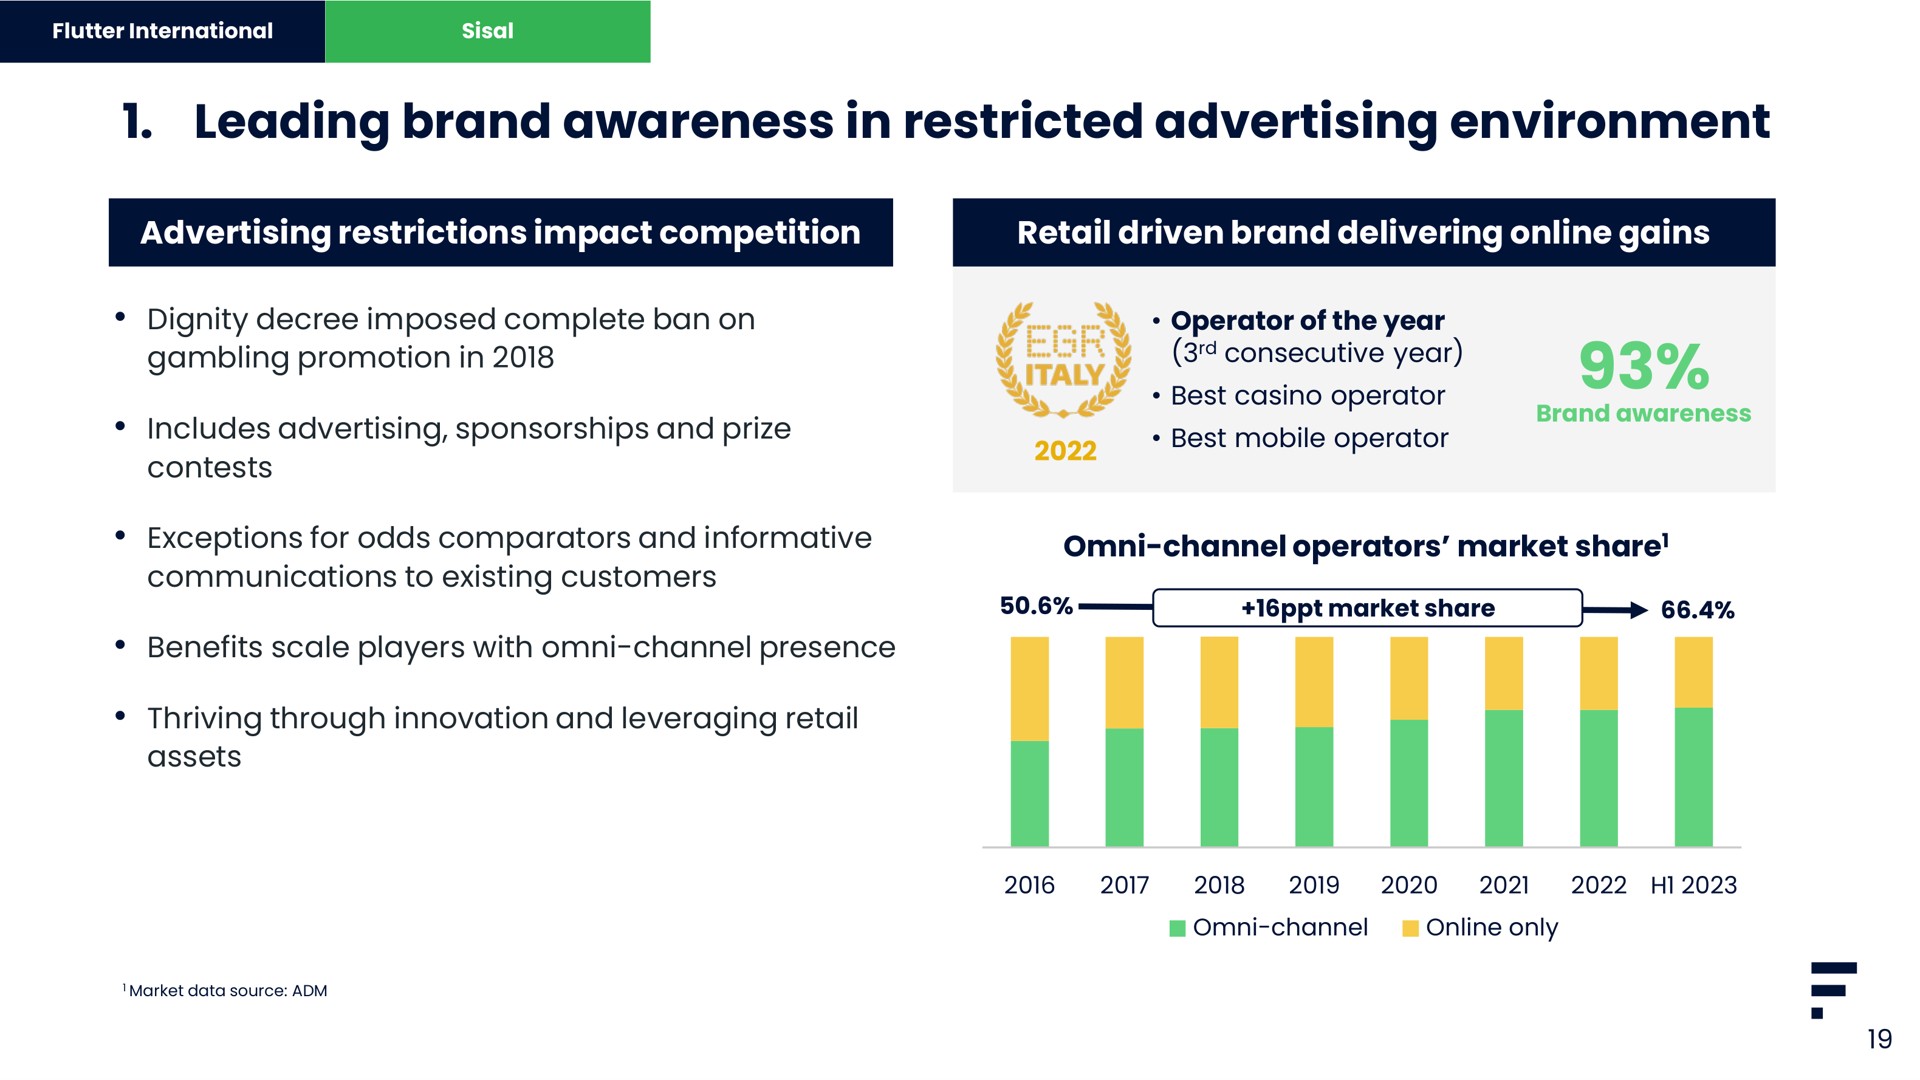 leading brand awareness in restricted advertising environment | Flutter